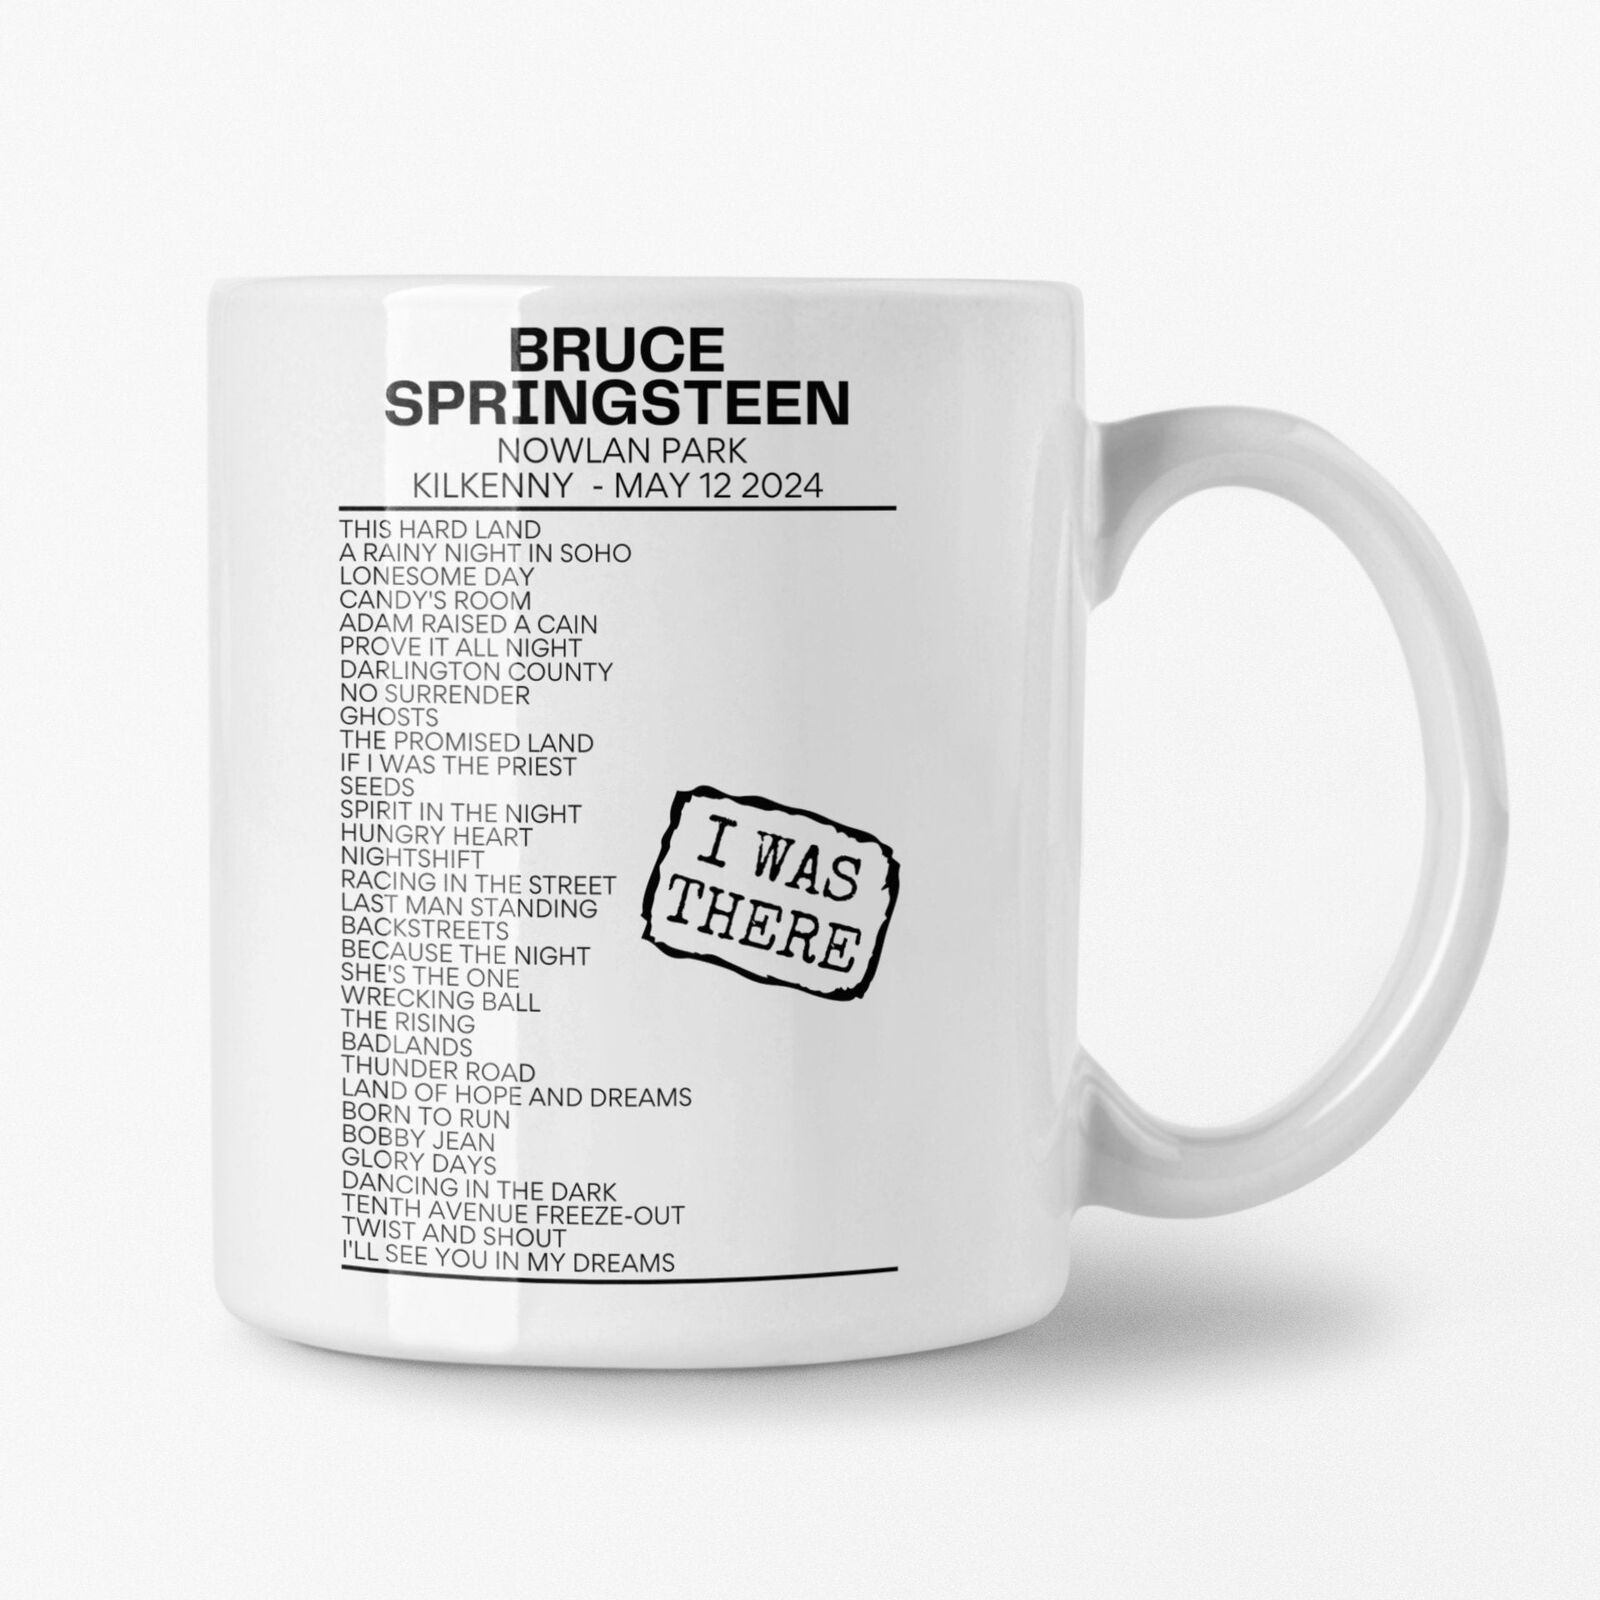 Bruce Springsteen Kilkenny May 12 2024 Replica Setlist Mug - I Was There